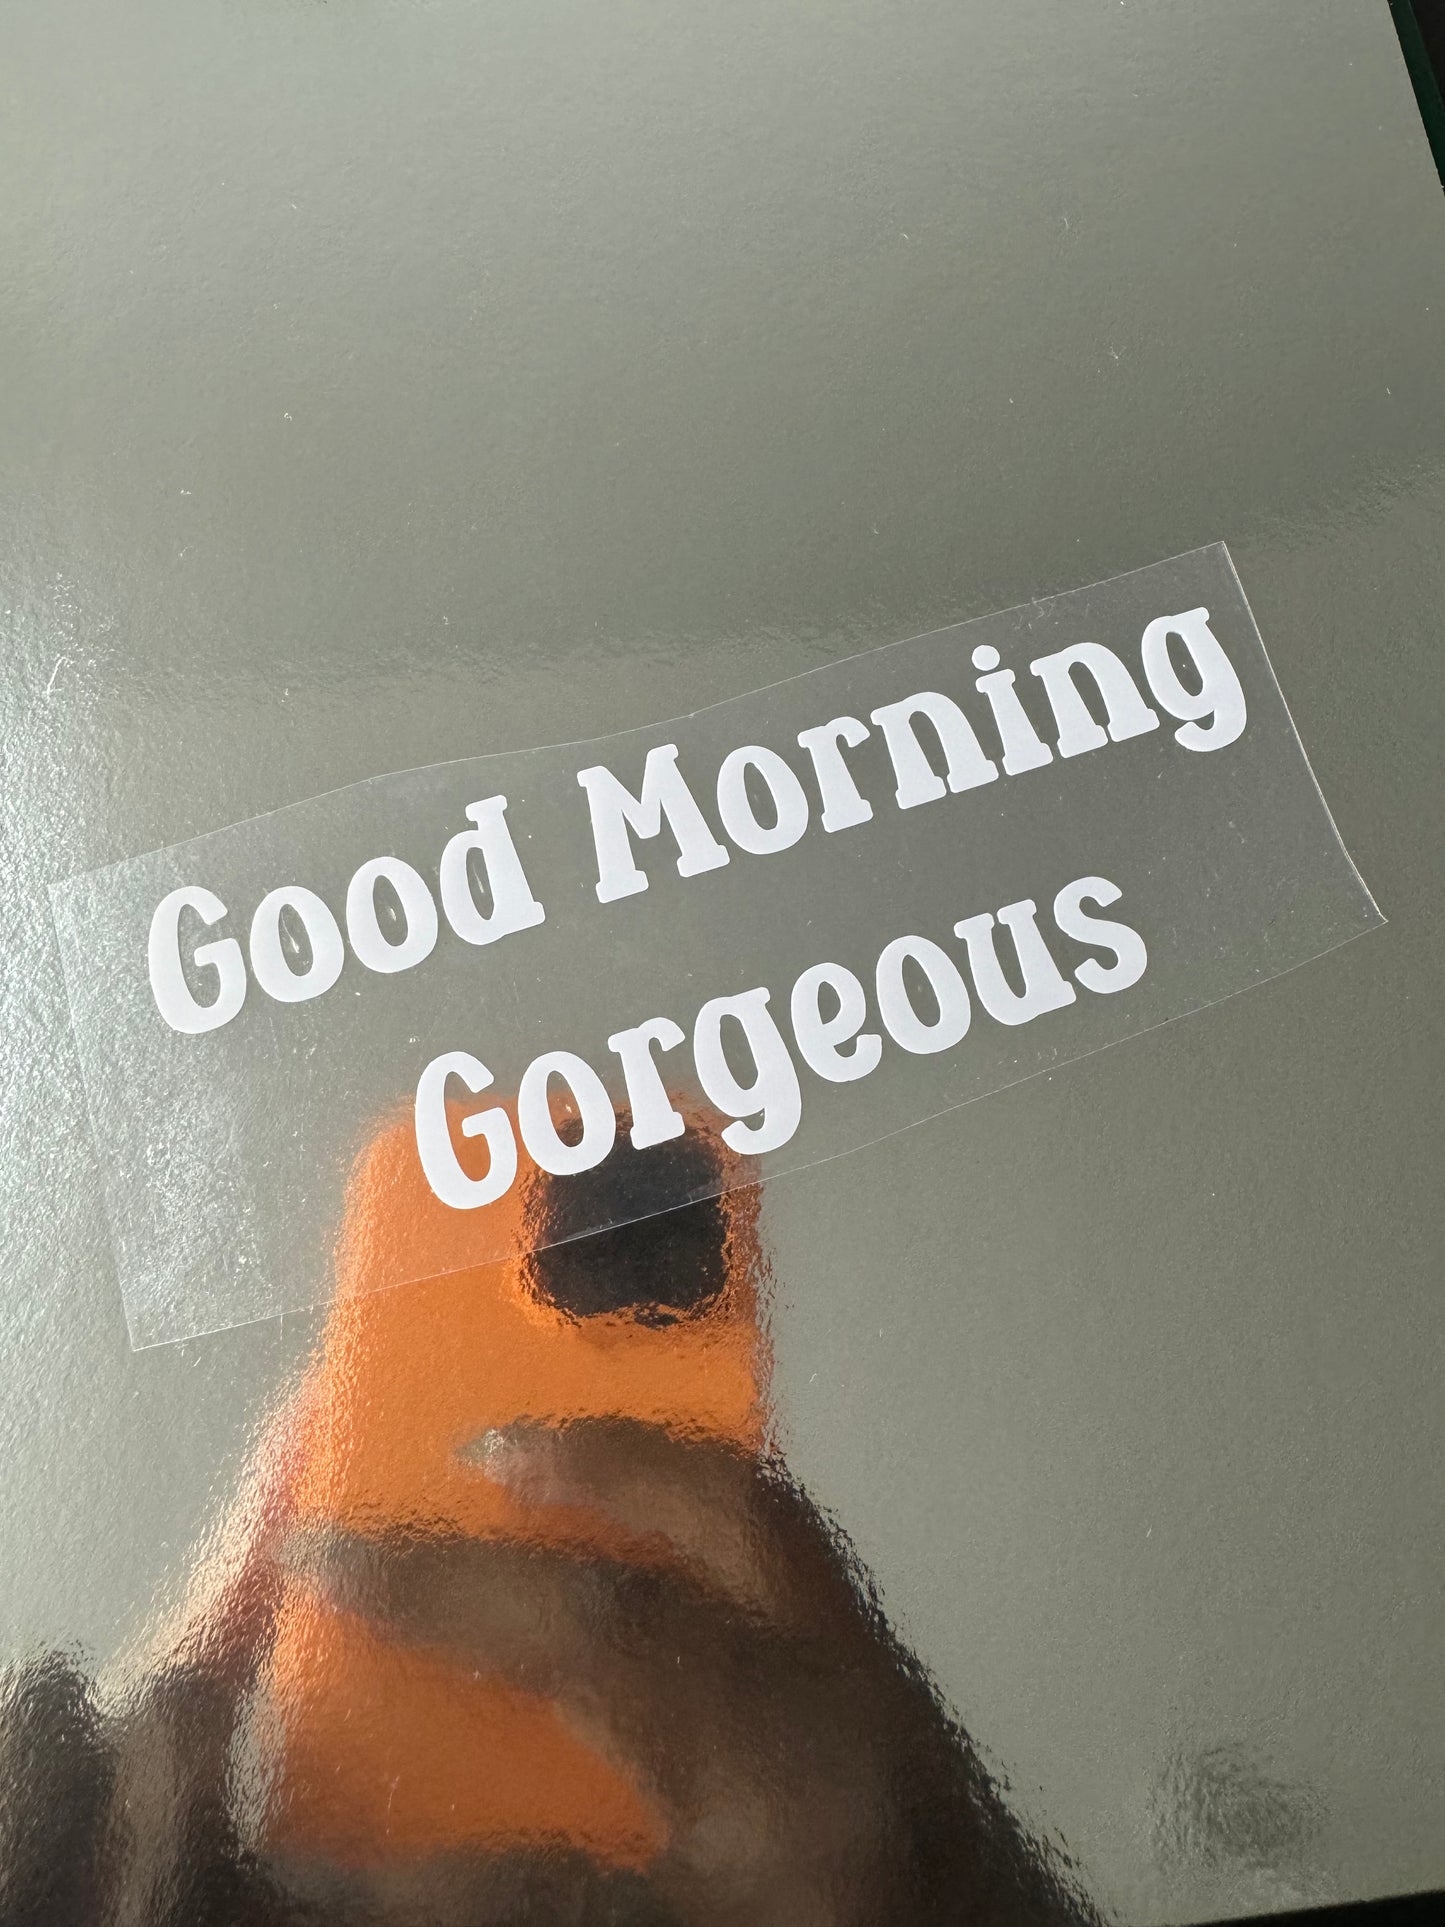 Good Morning Gorgeous Mirror Decal